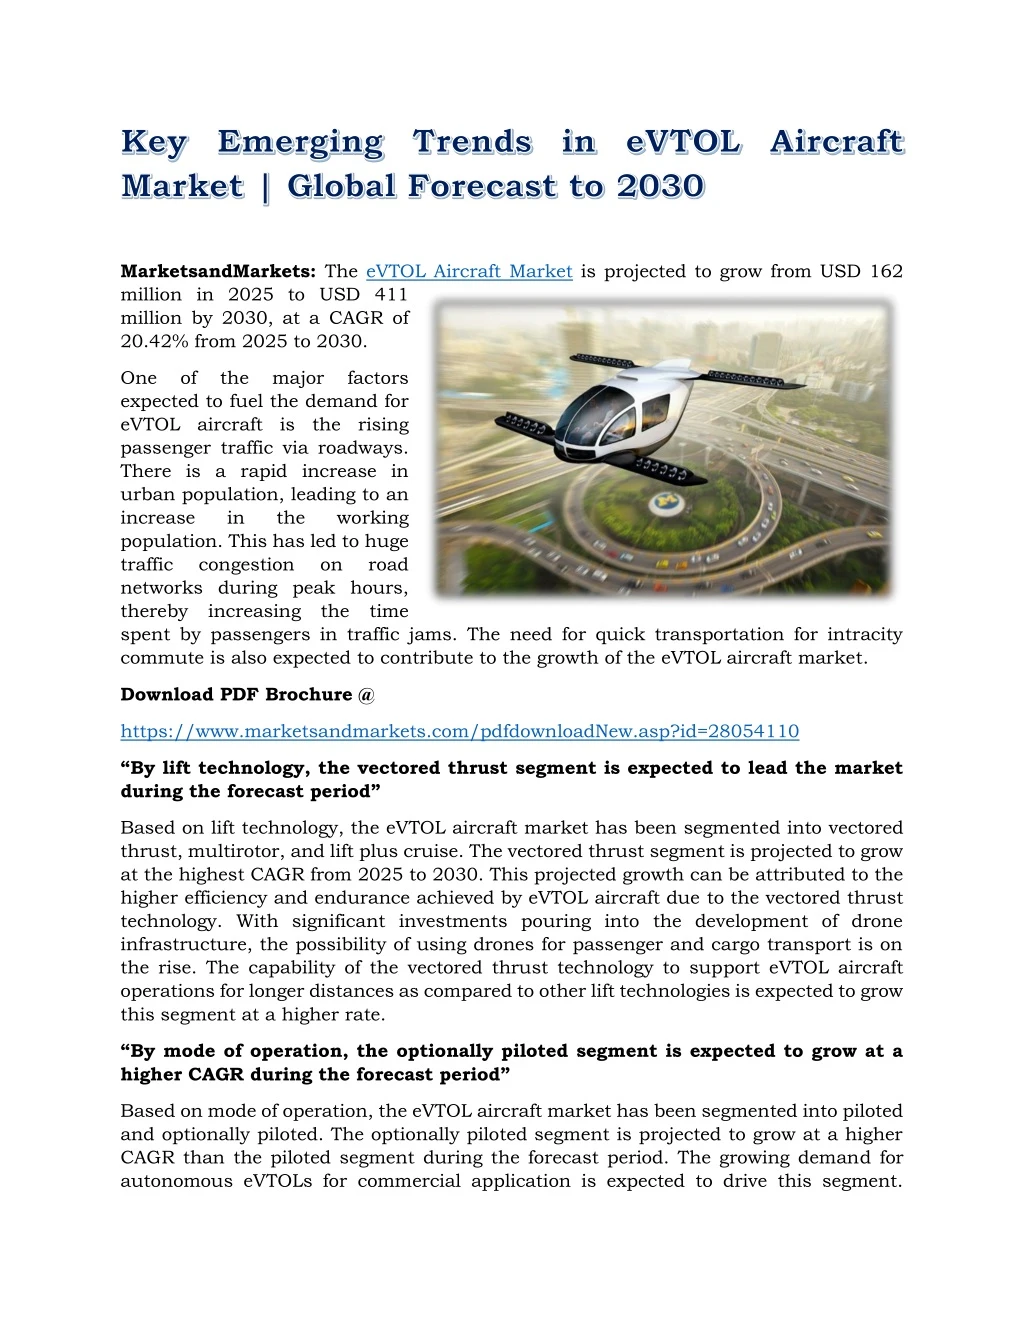 marketsandmarkets the evtol aircraft market